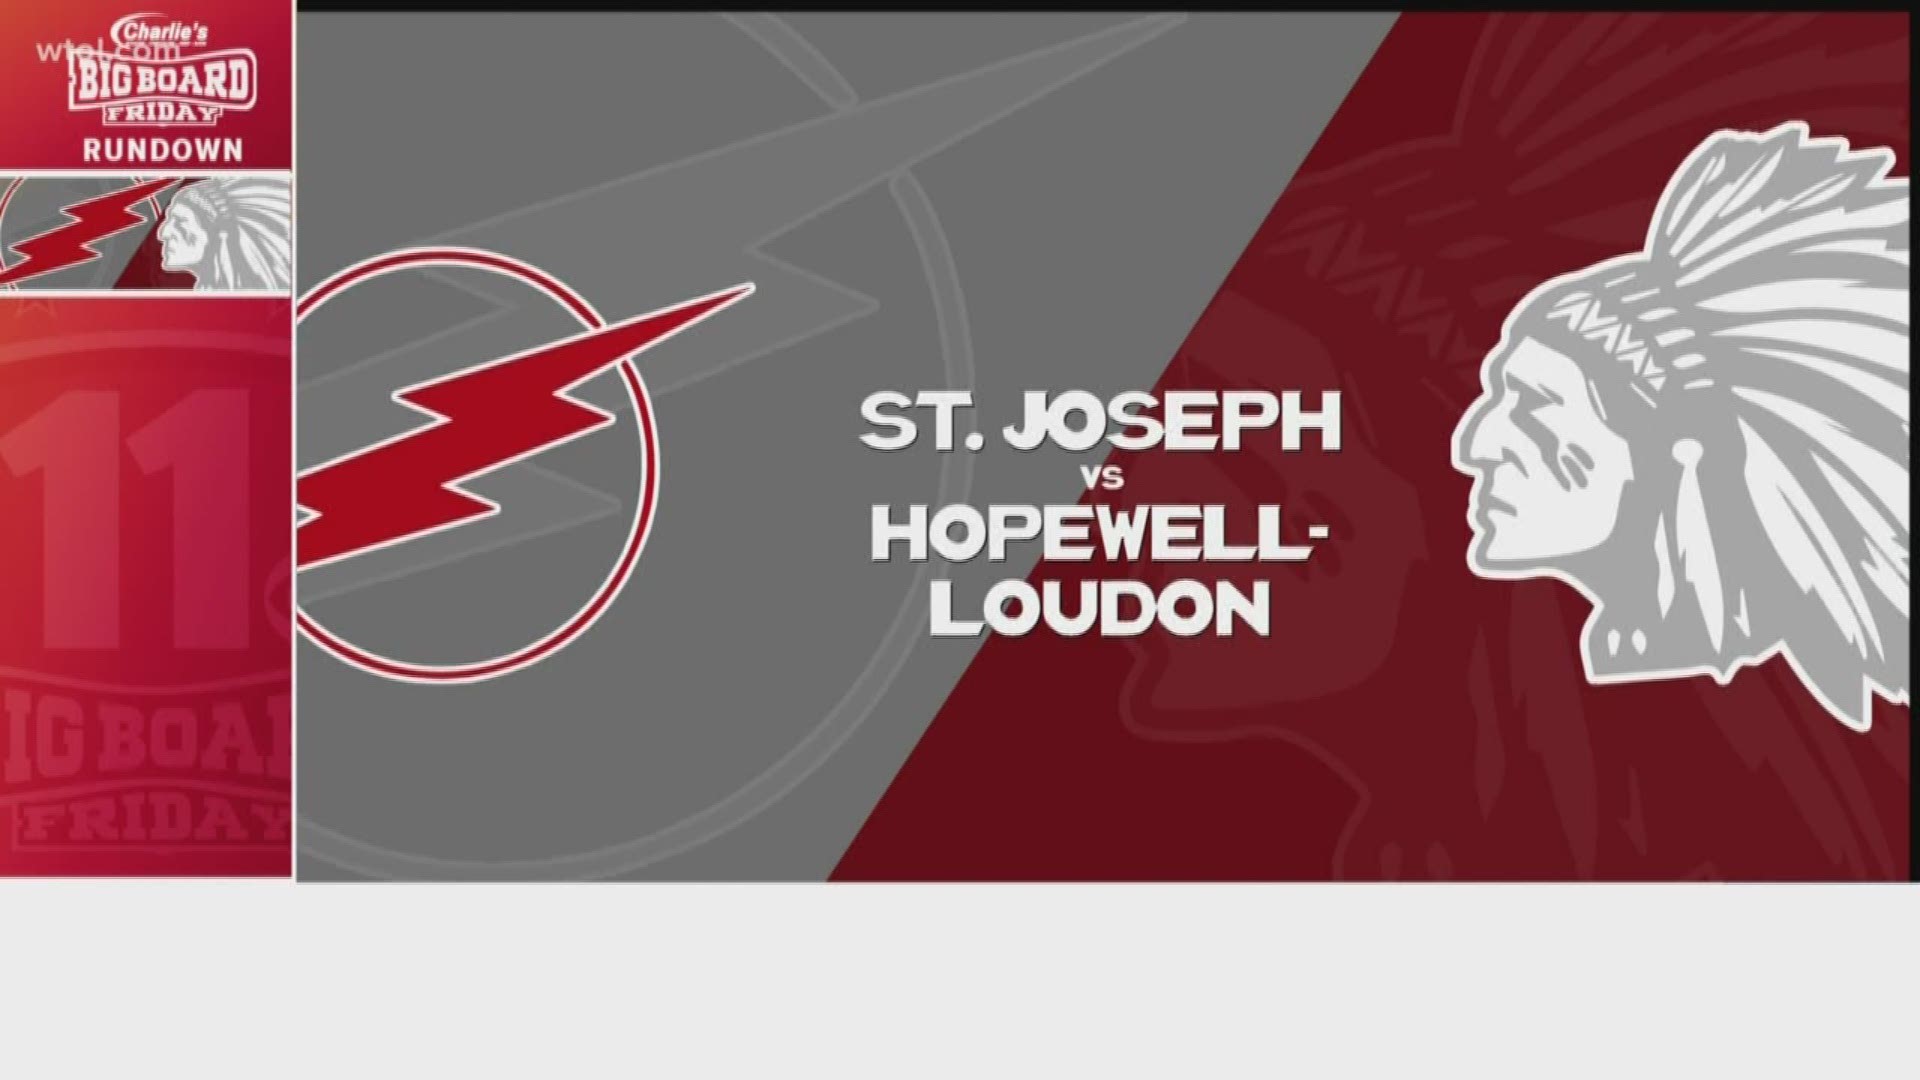 Hopewell-Loudon win 43-6